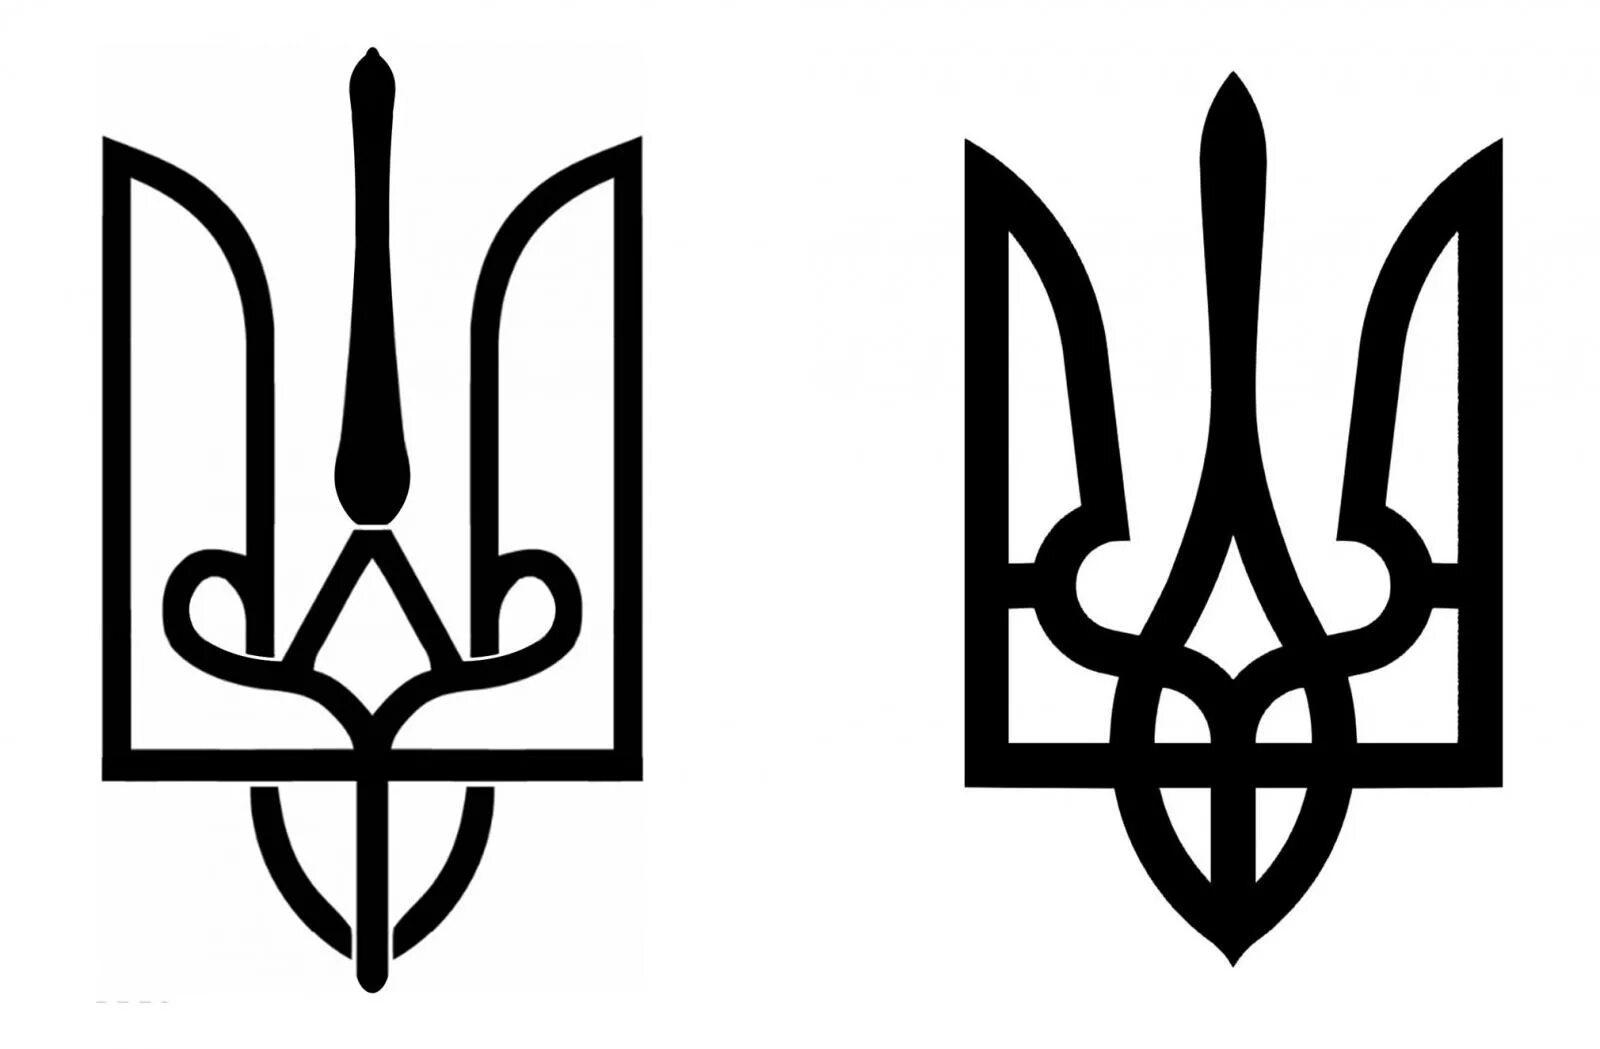 Герб Украины трезубец. Тризуб символ Украины. Владимиров Тризуб. Украинский символ трезубец.